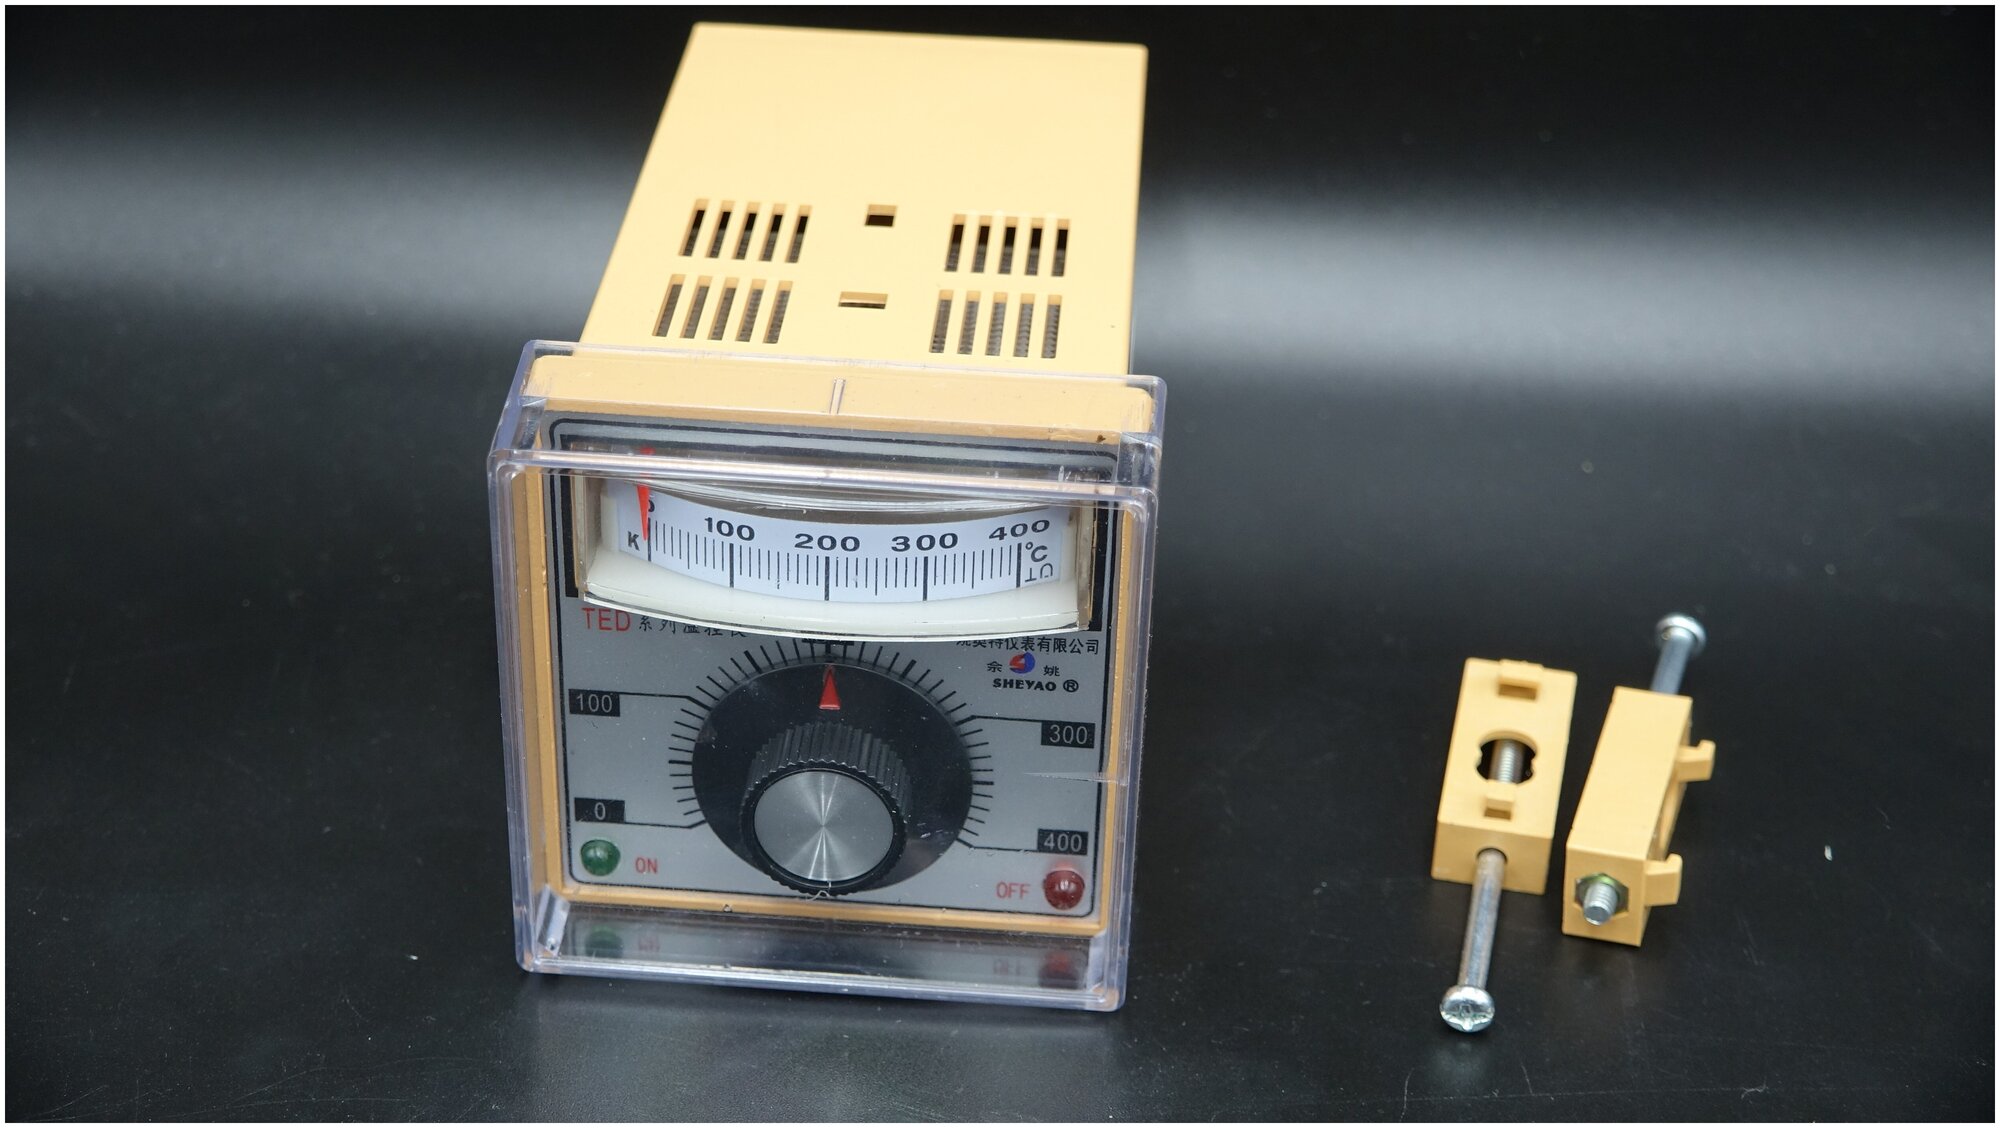 Регулятор температуры 0-400 °C k-типа TED-2001 - фотография № 1